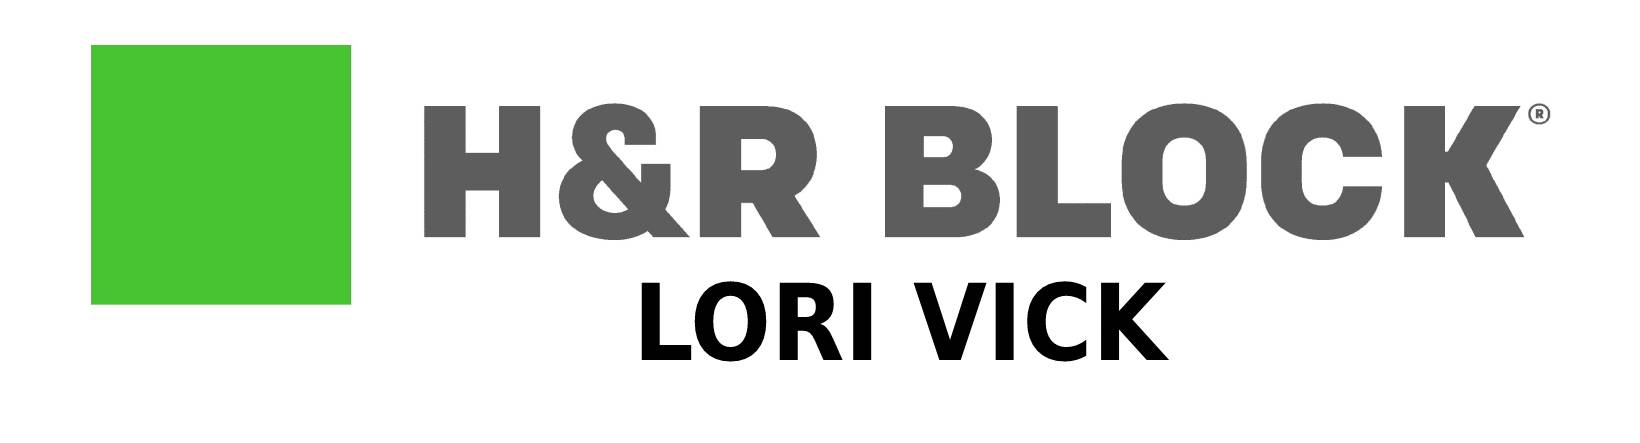 H&R Block-Lori Vick